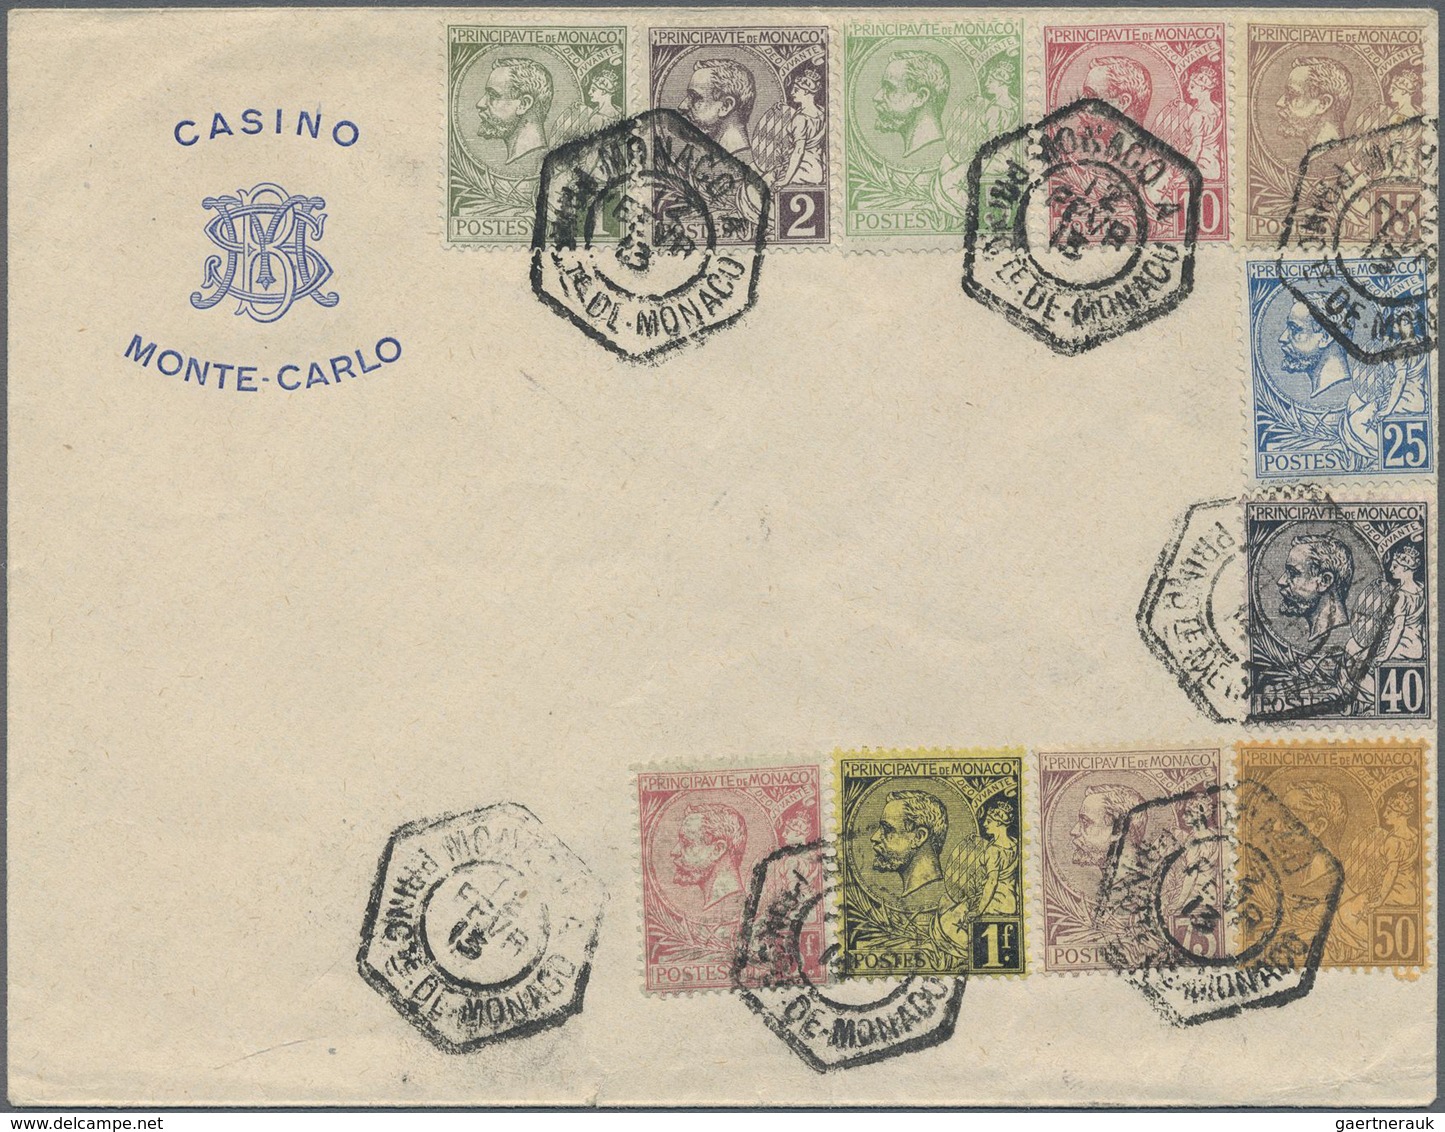 Br Monaco: 1891, 1 C Oliv To 5 Fr Carmine Cancelled 1913 Complete On Envelope "Casino Monte-Carlo" - Ongebruikt